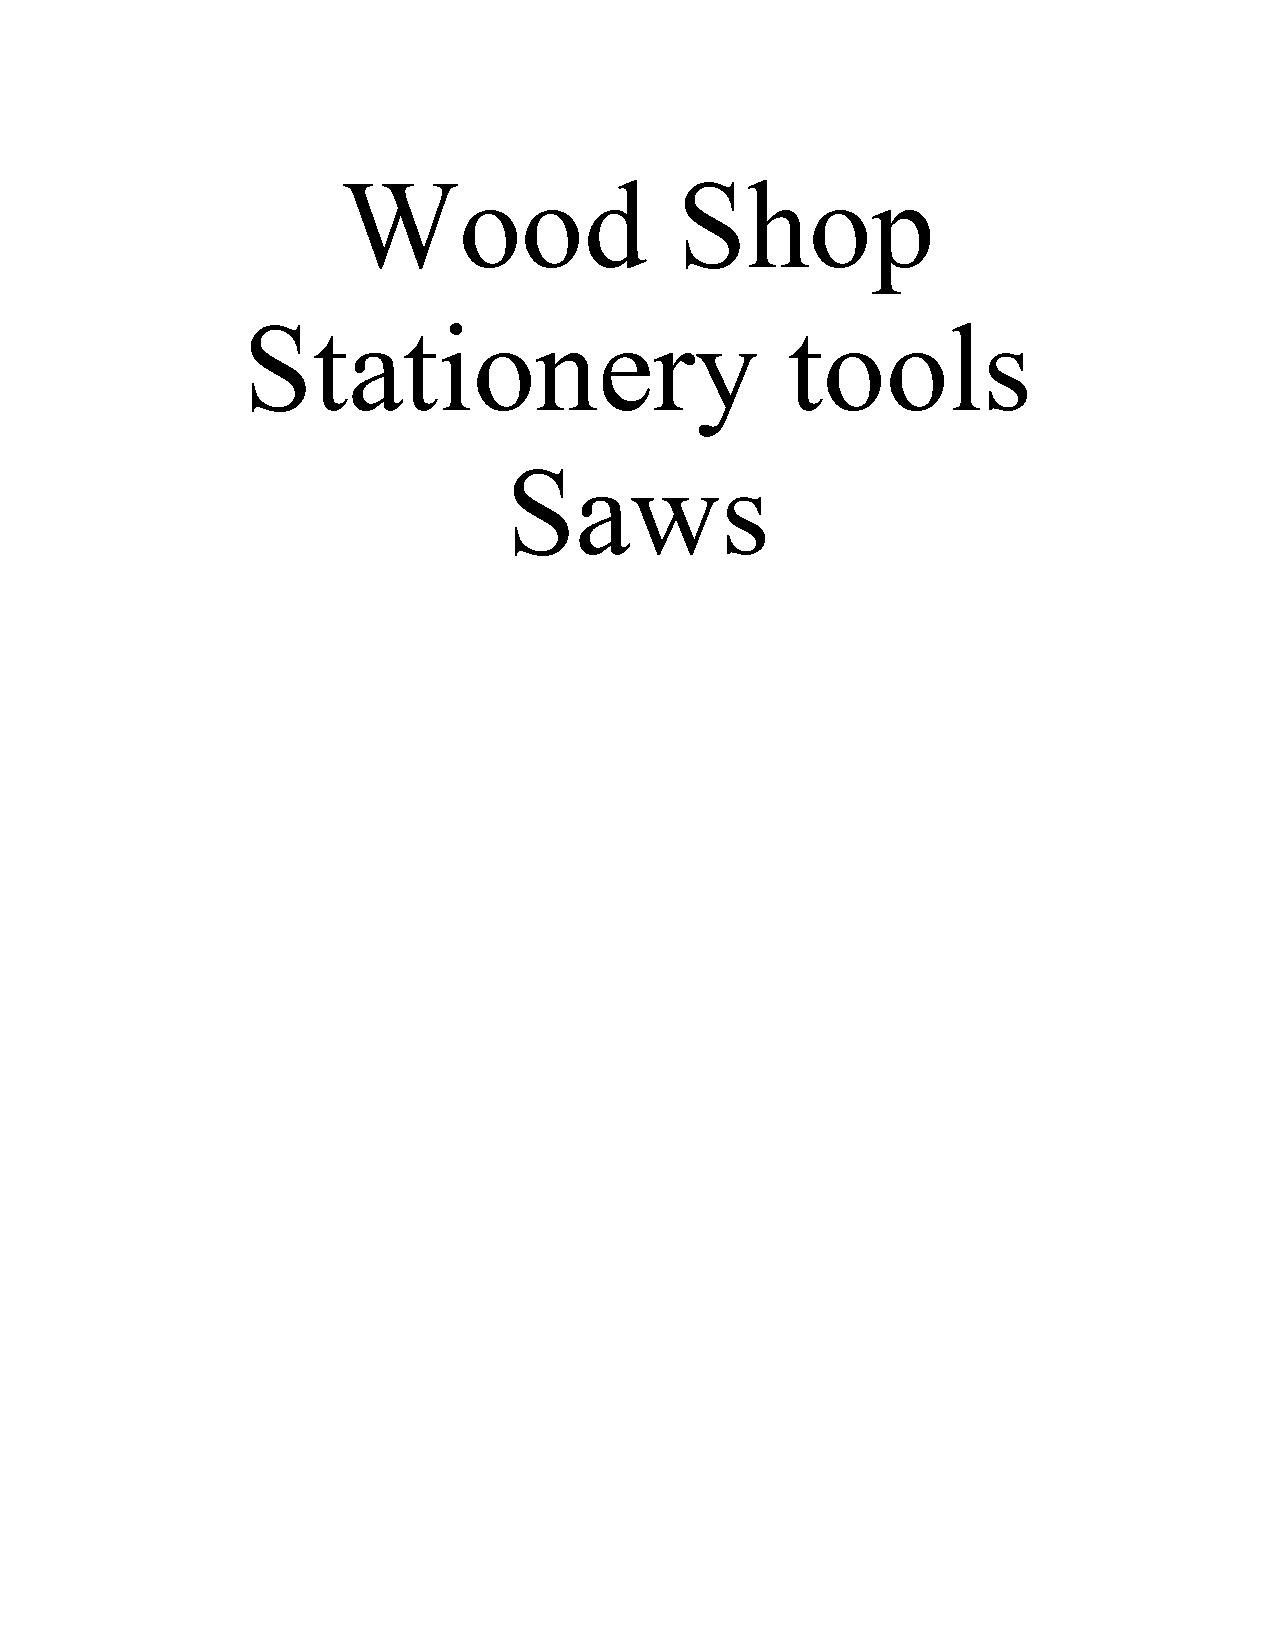 Wood Stationery Saws.pdf